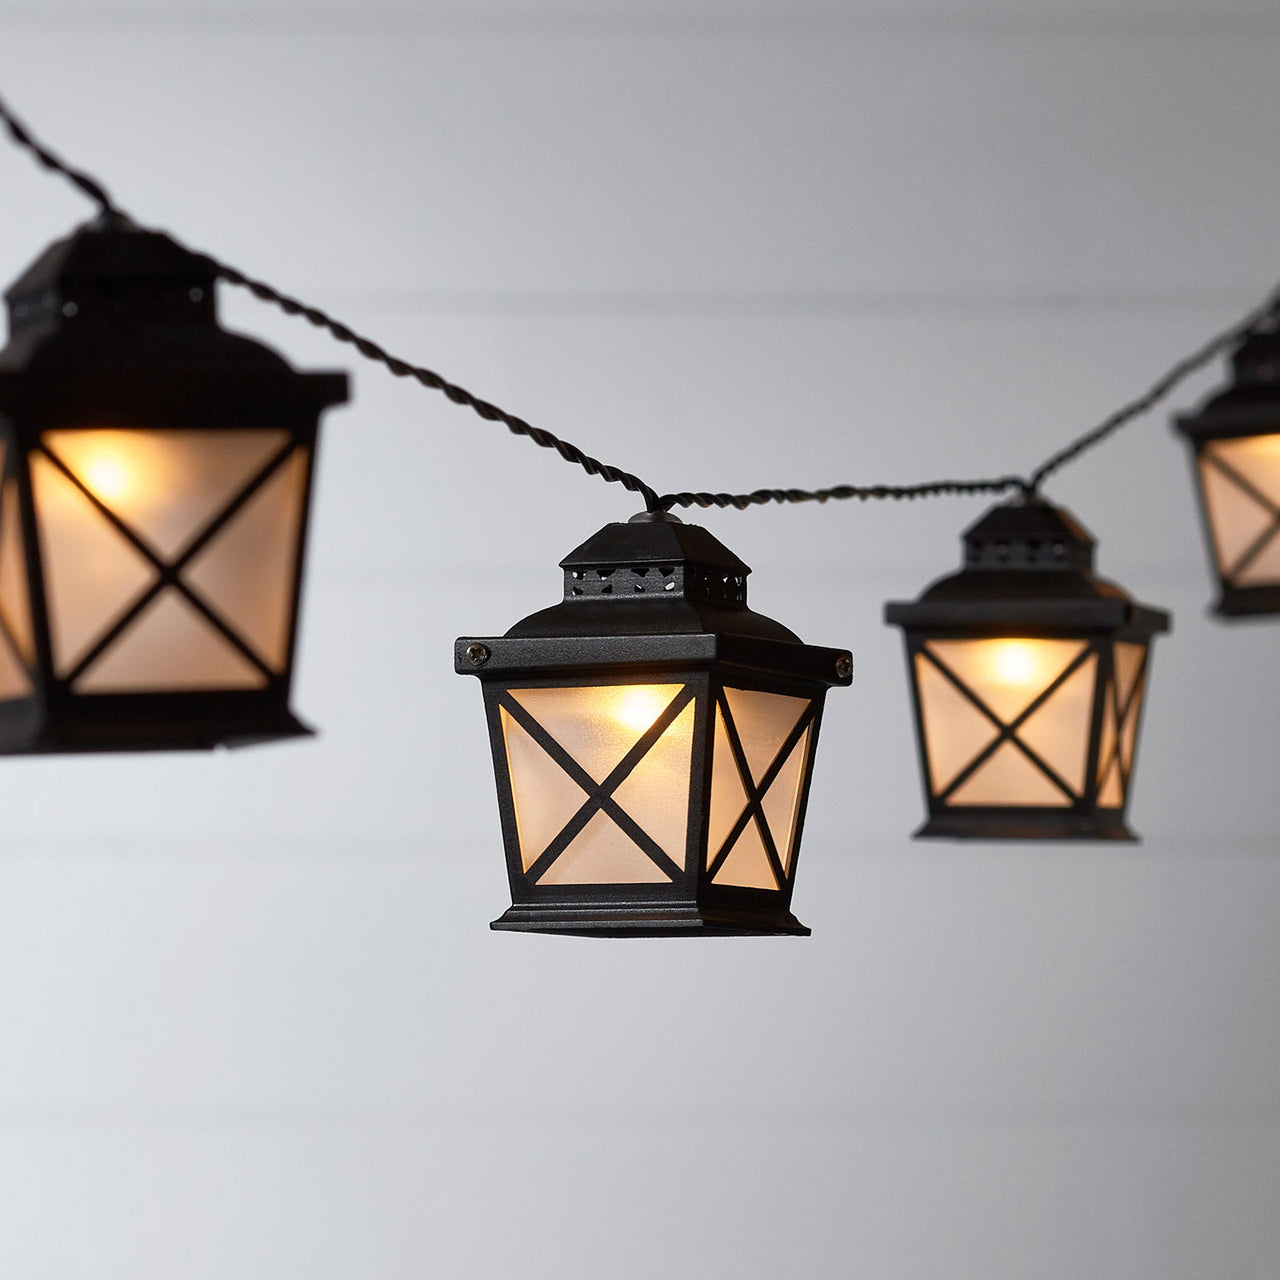 Mini LED-Lichter für Lampions (30er-Set) - Batteriebetrieben - Laternen  Beleuchtung - warmweiss